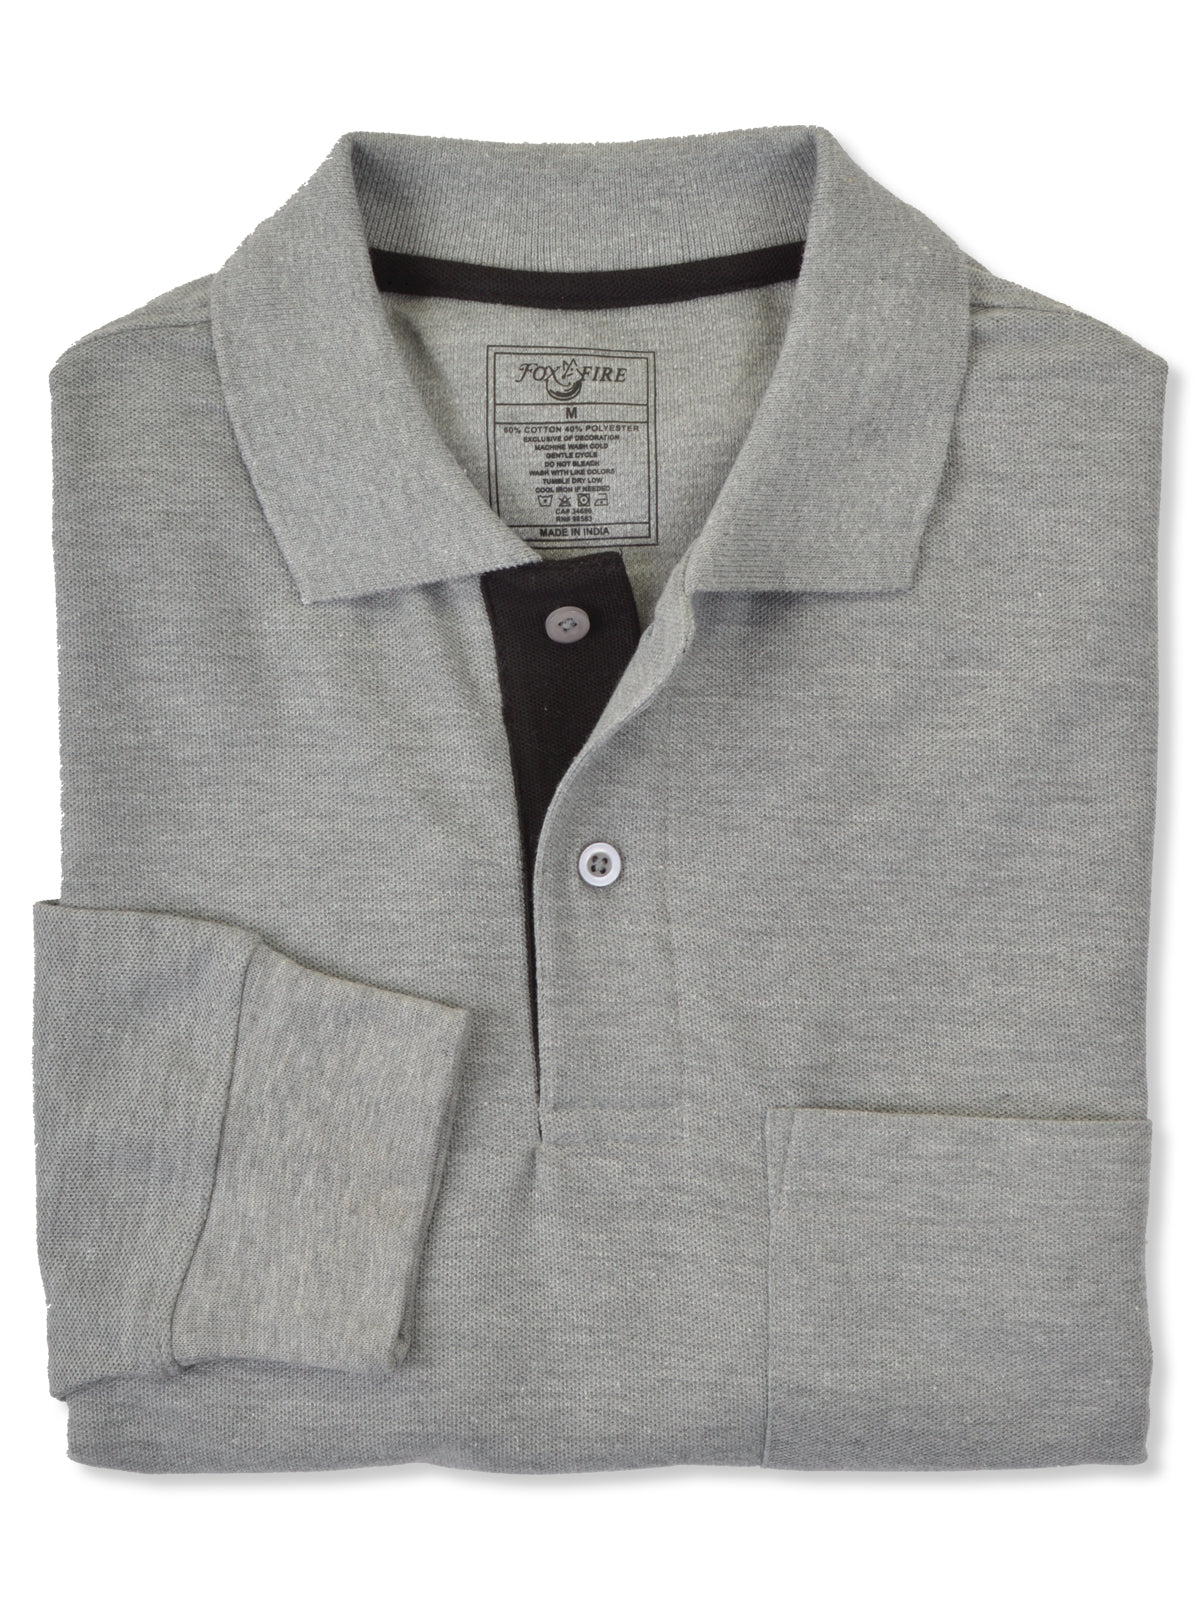 Foxfire Long Sleeve Cotton Blend Men's Polo Shirts in Grey - Big Man Sizes